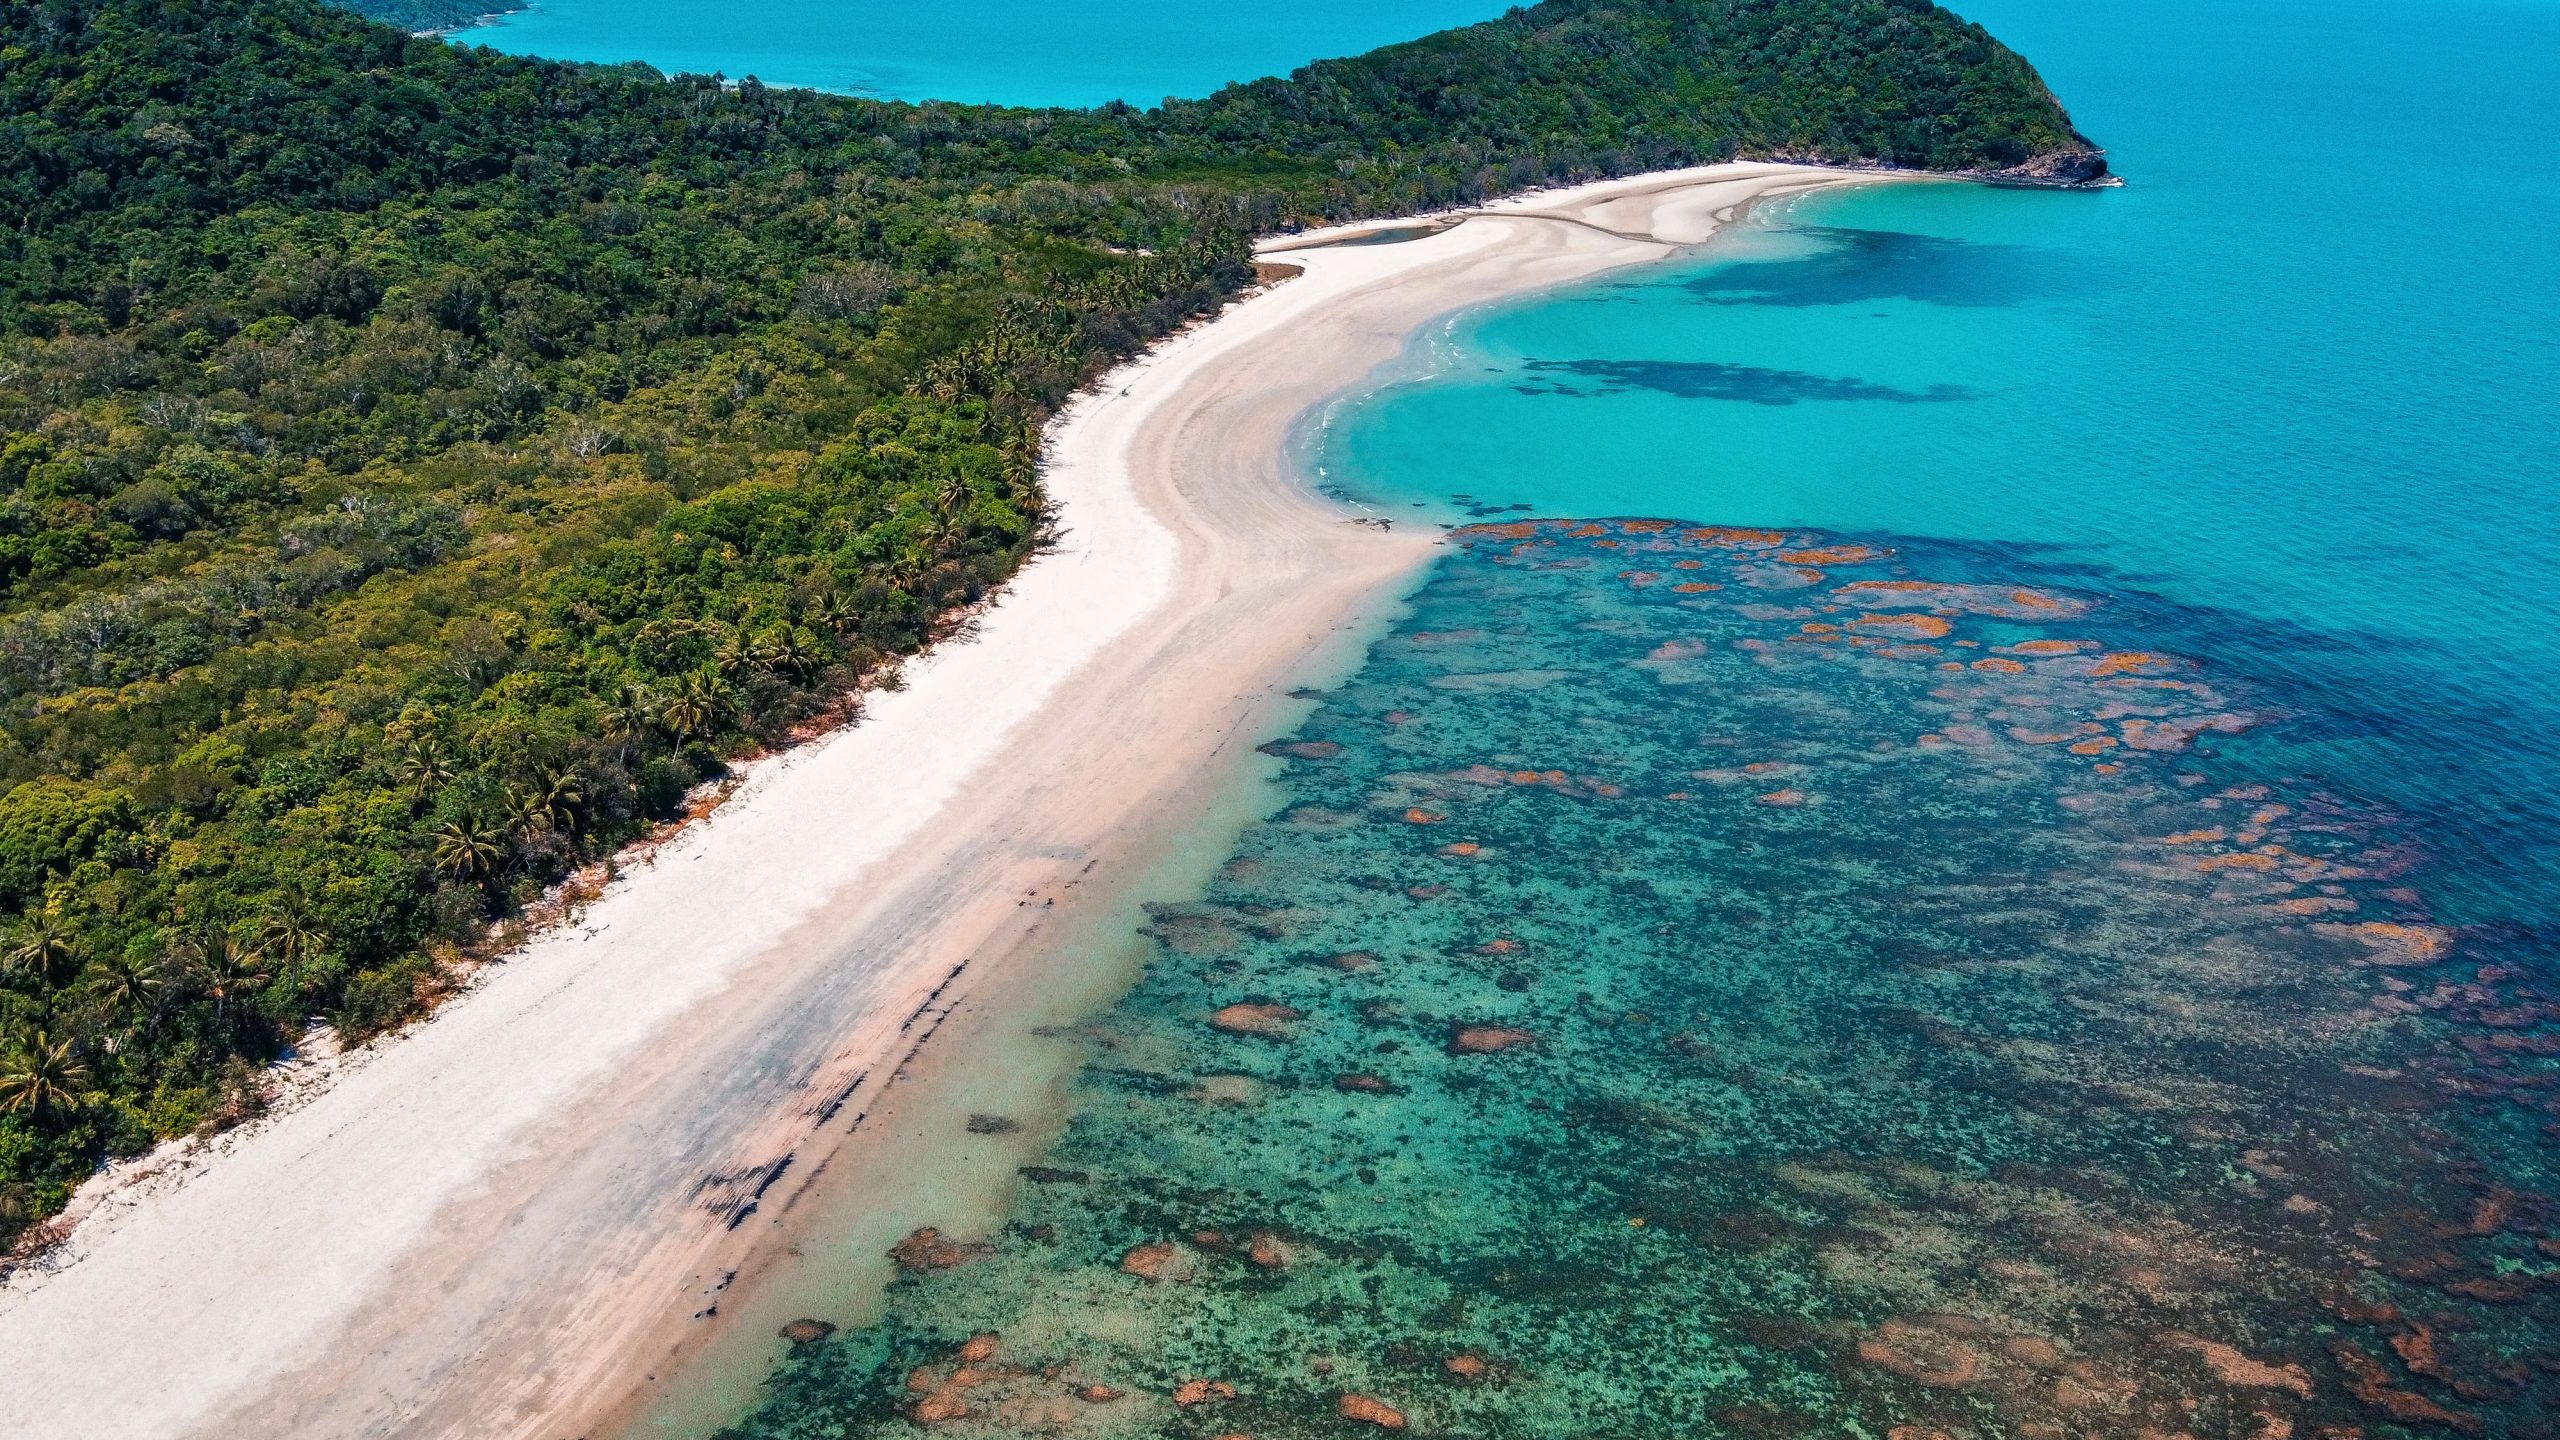 To save Great Barrier Reef status, Australia to take ambassadors snorkelling